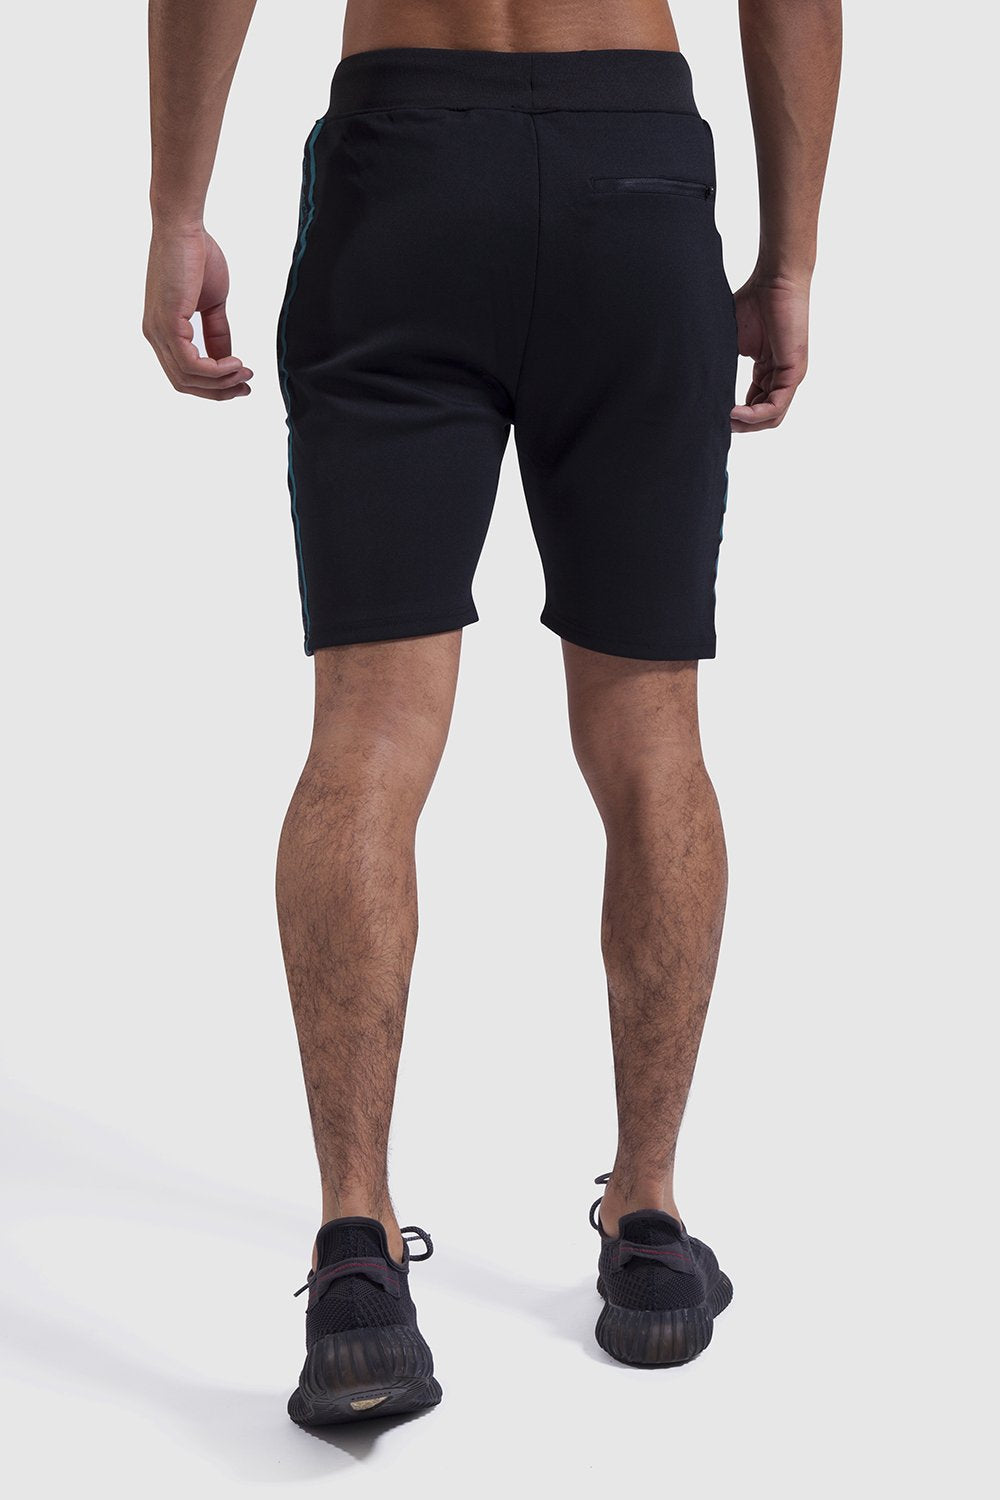 Black/Teal mens gym shorts 